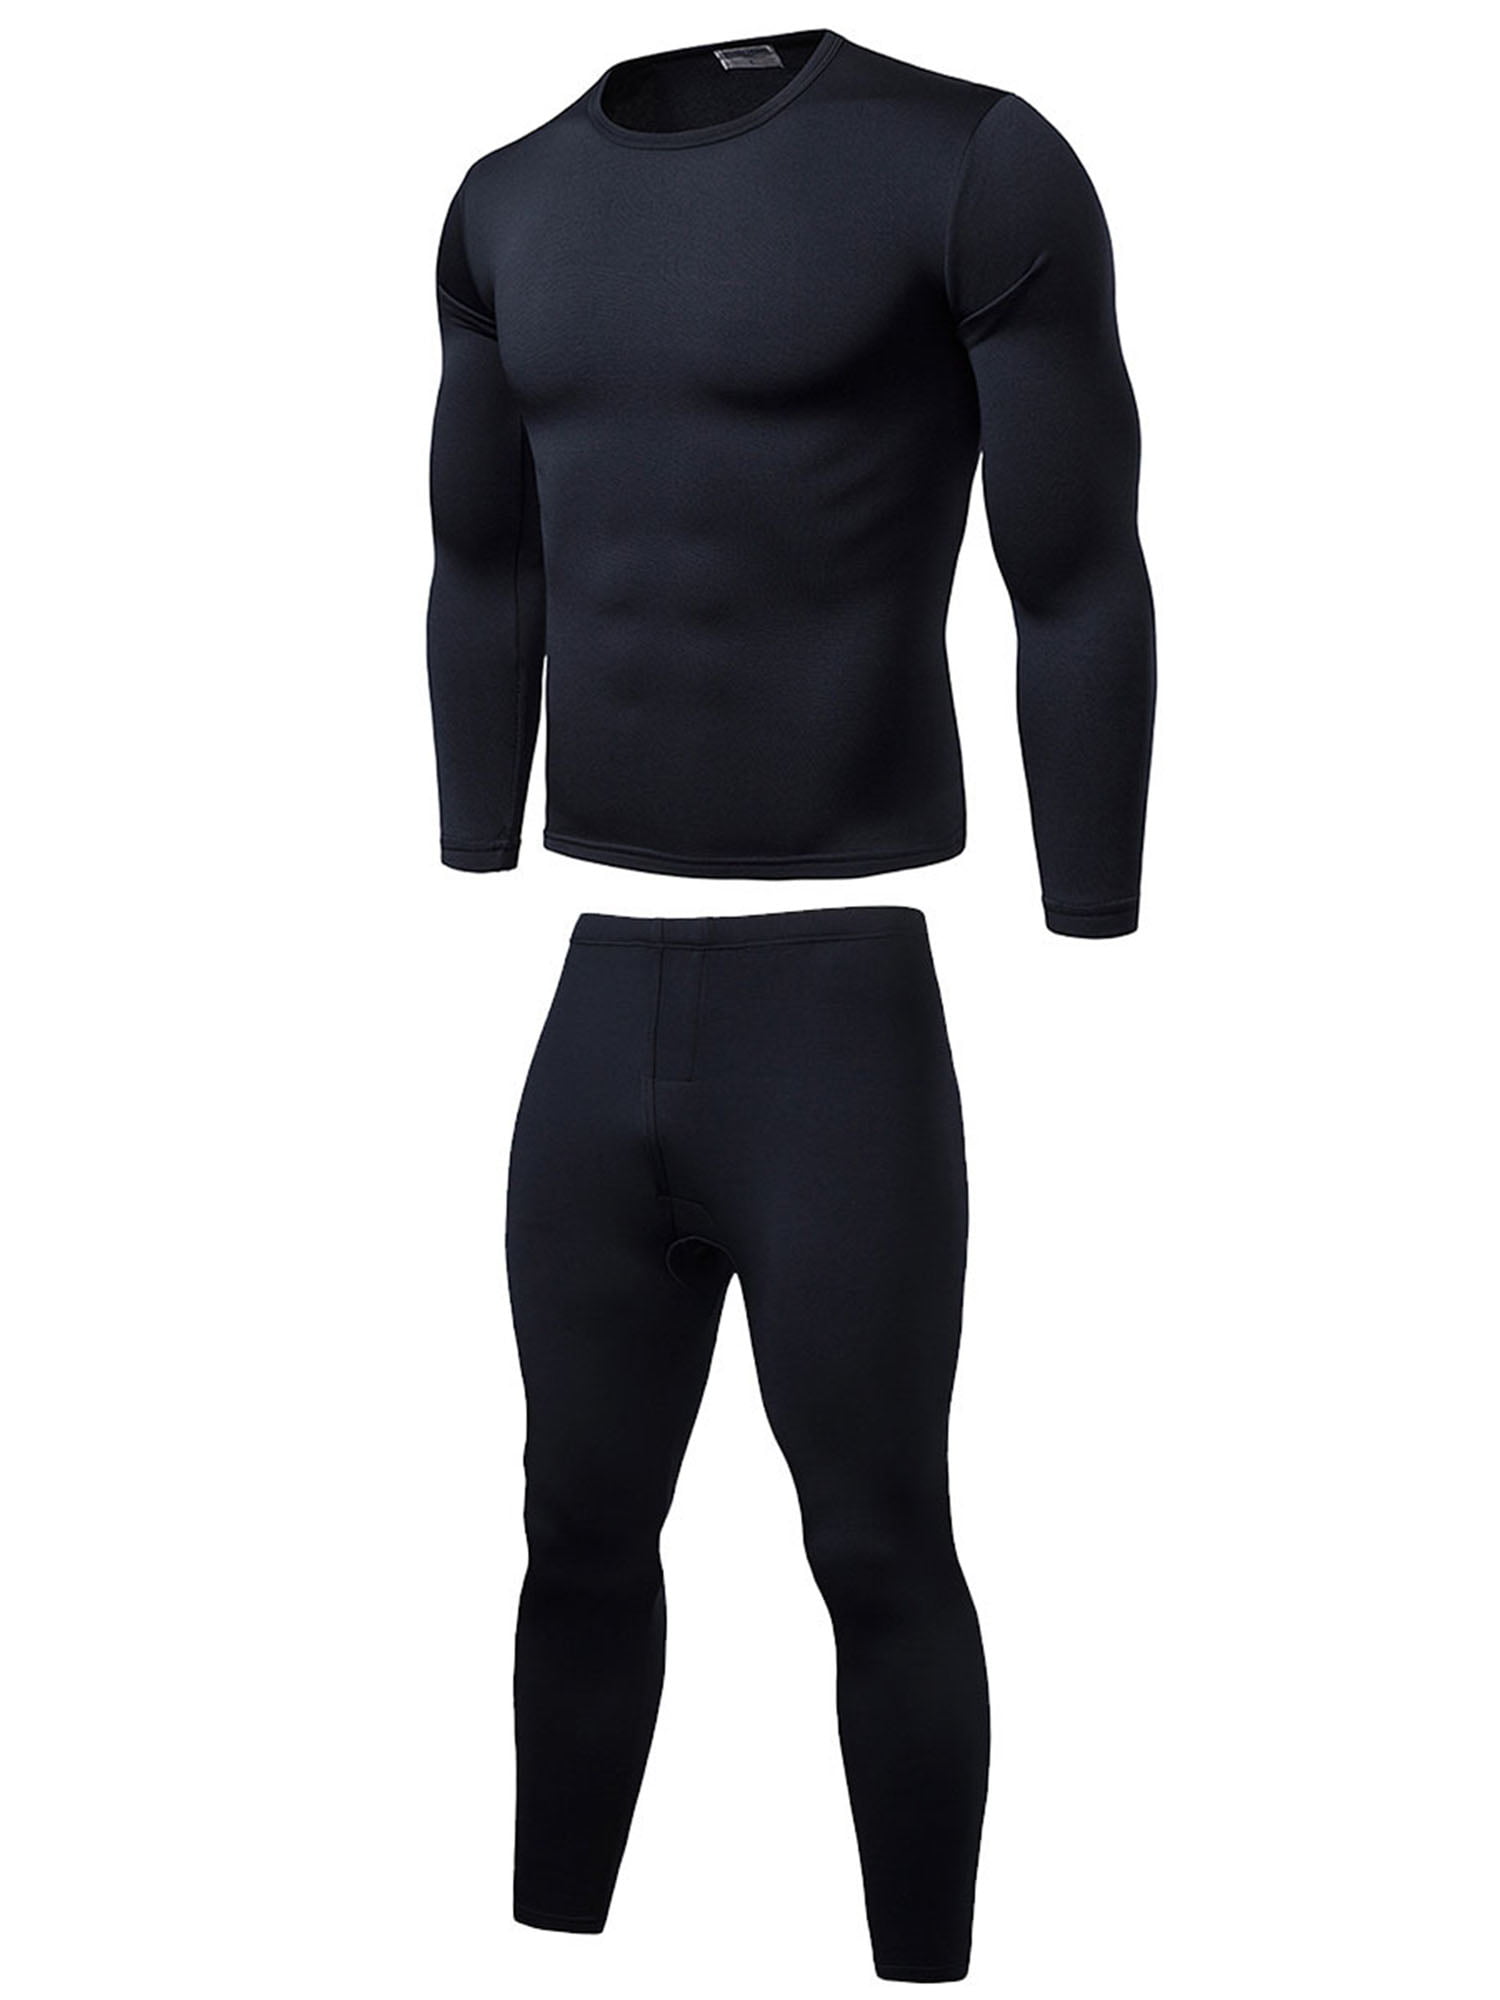 Men’s Thermal Underwear Vest T Shirt Top Long Sleeve Long John Ski Warm Winter 